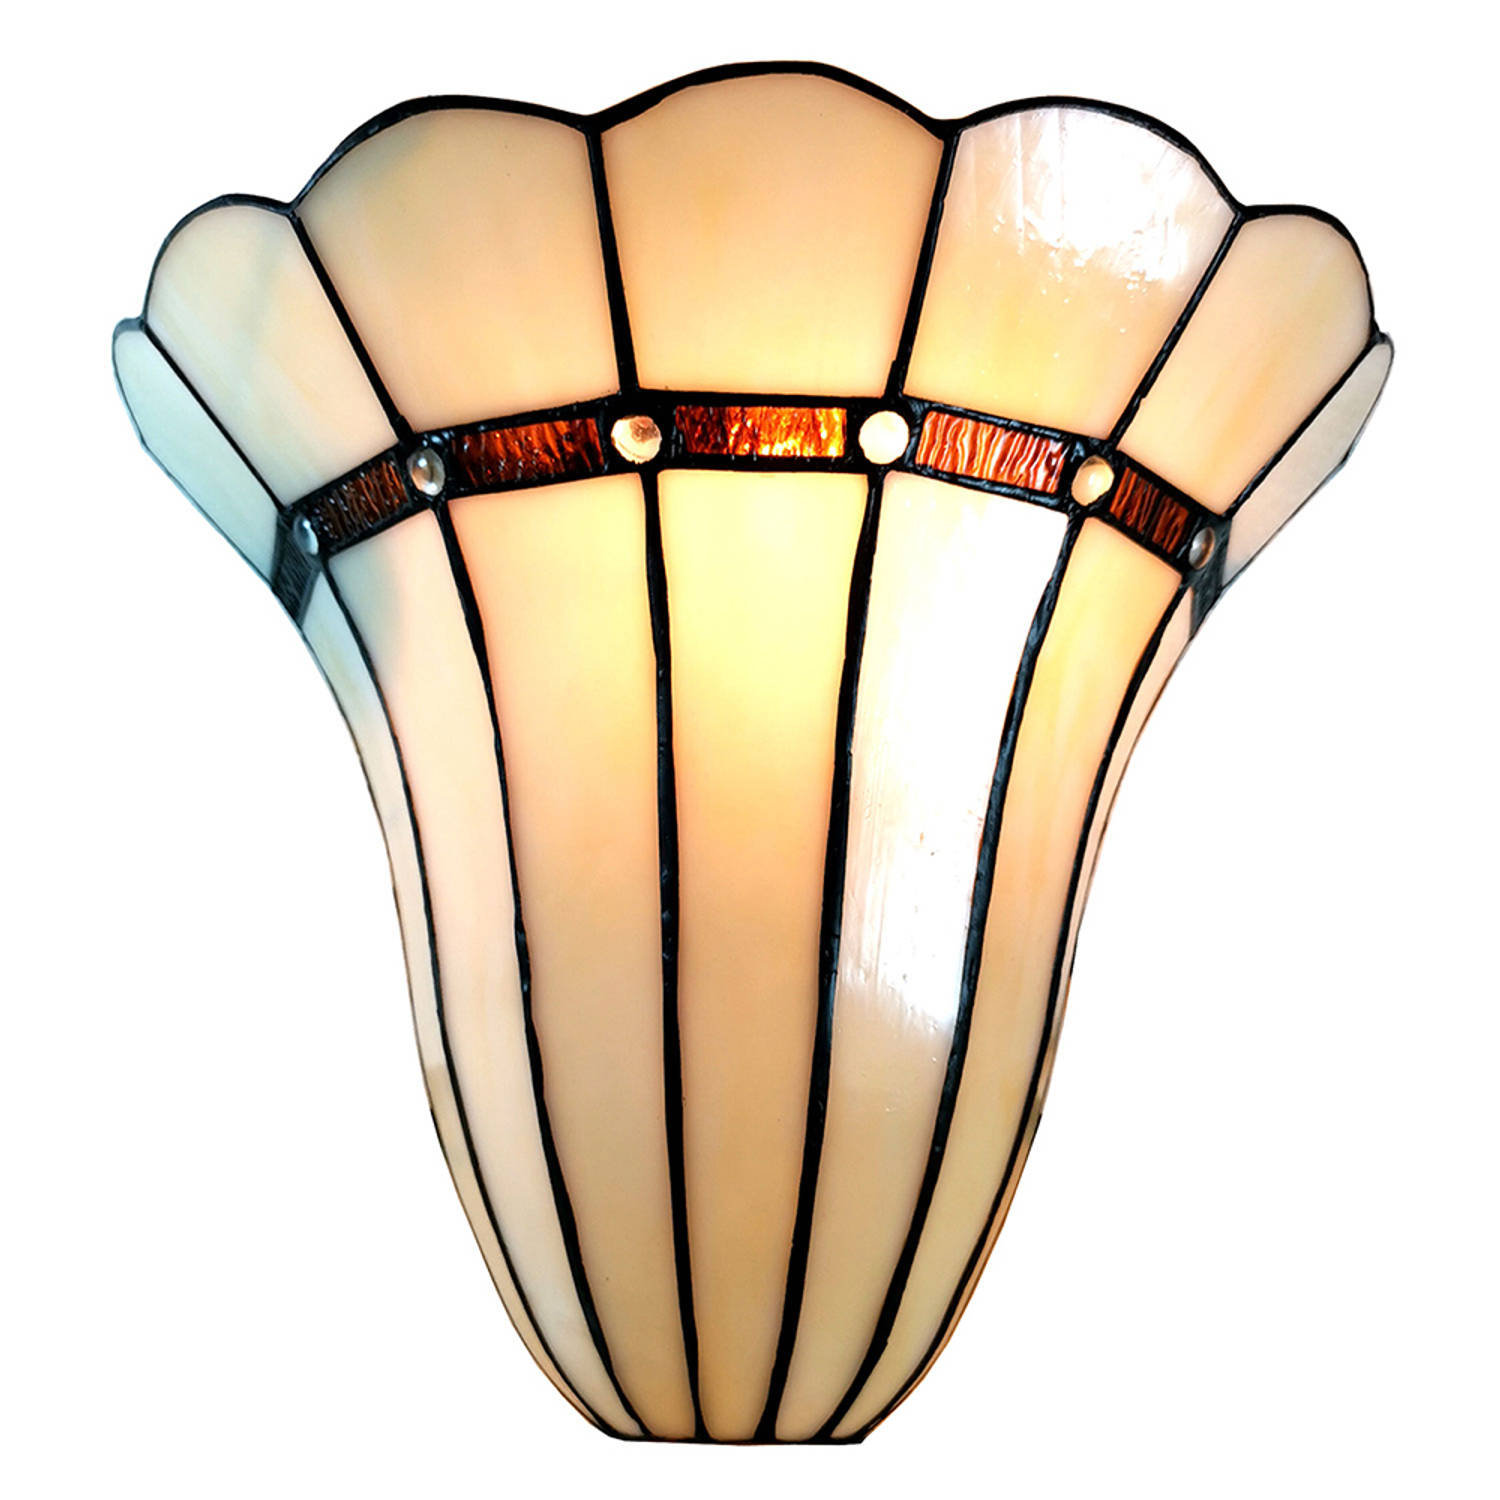 HAES DECO - Wandlamp Tiffany 28*18*33 cm Beige Ijzer, Glas Art Deco Muurlamp Sfeerlamp Glas in Lood